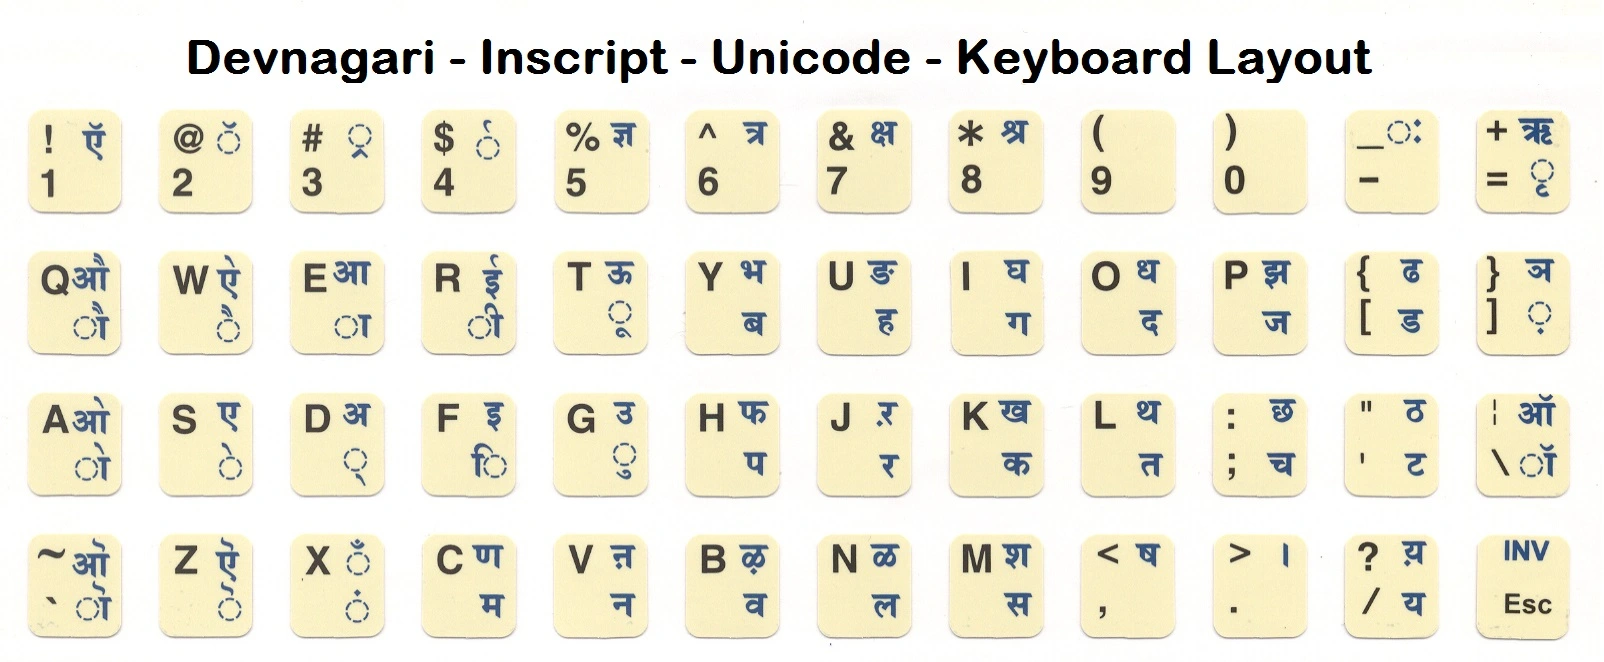 Devnagari Inscript Keyboard Layout For CPCT exam